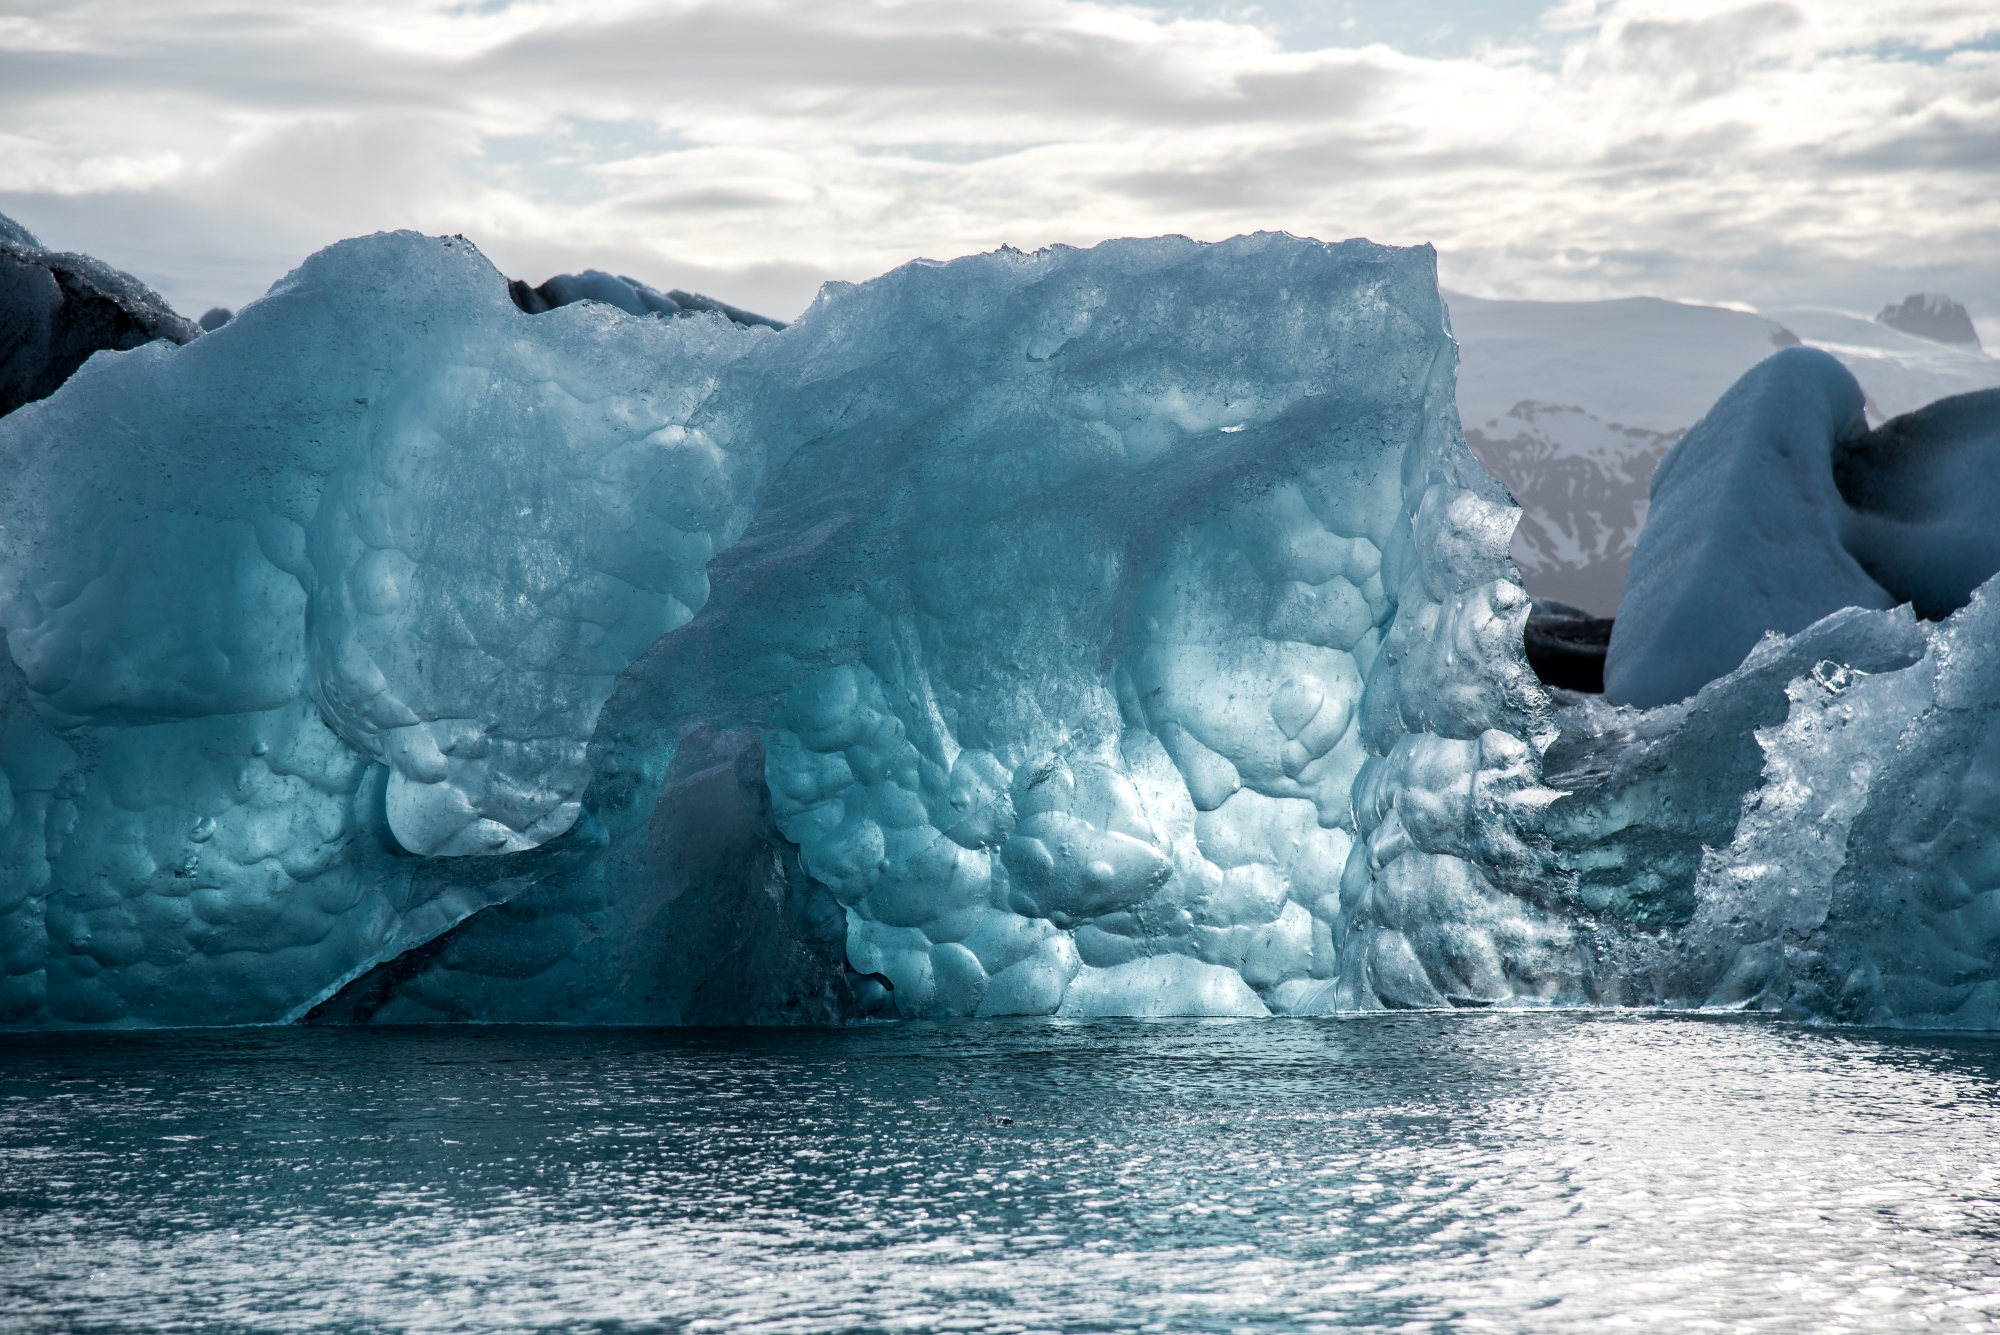 Iceberg melts into various shapes